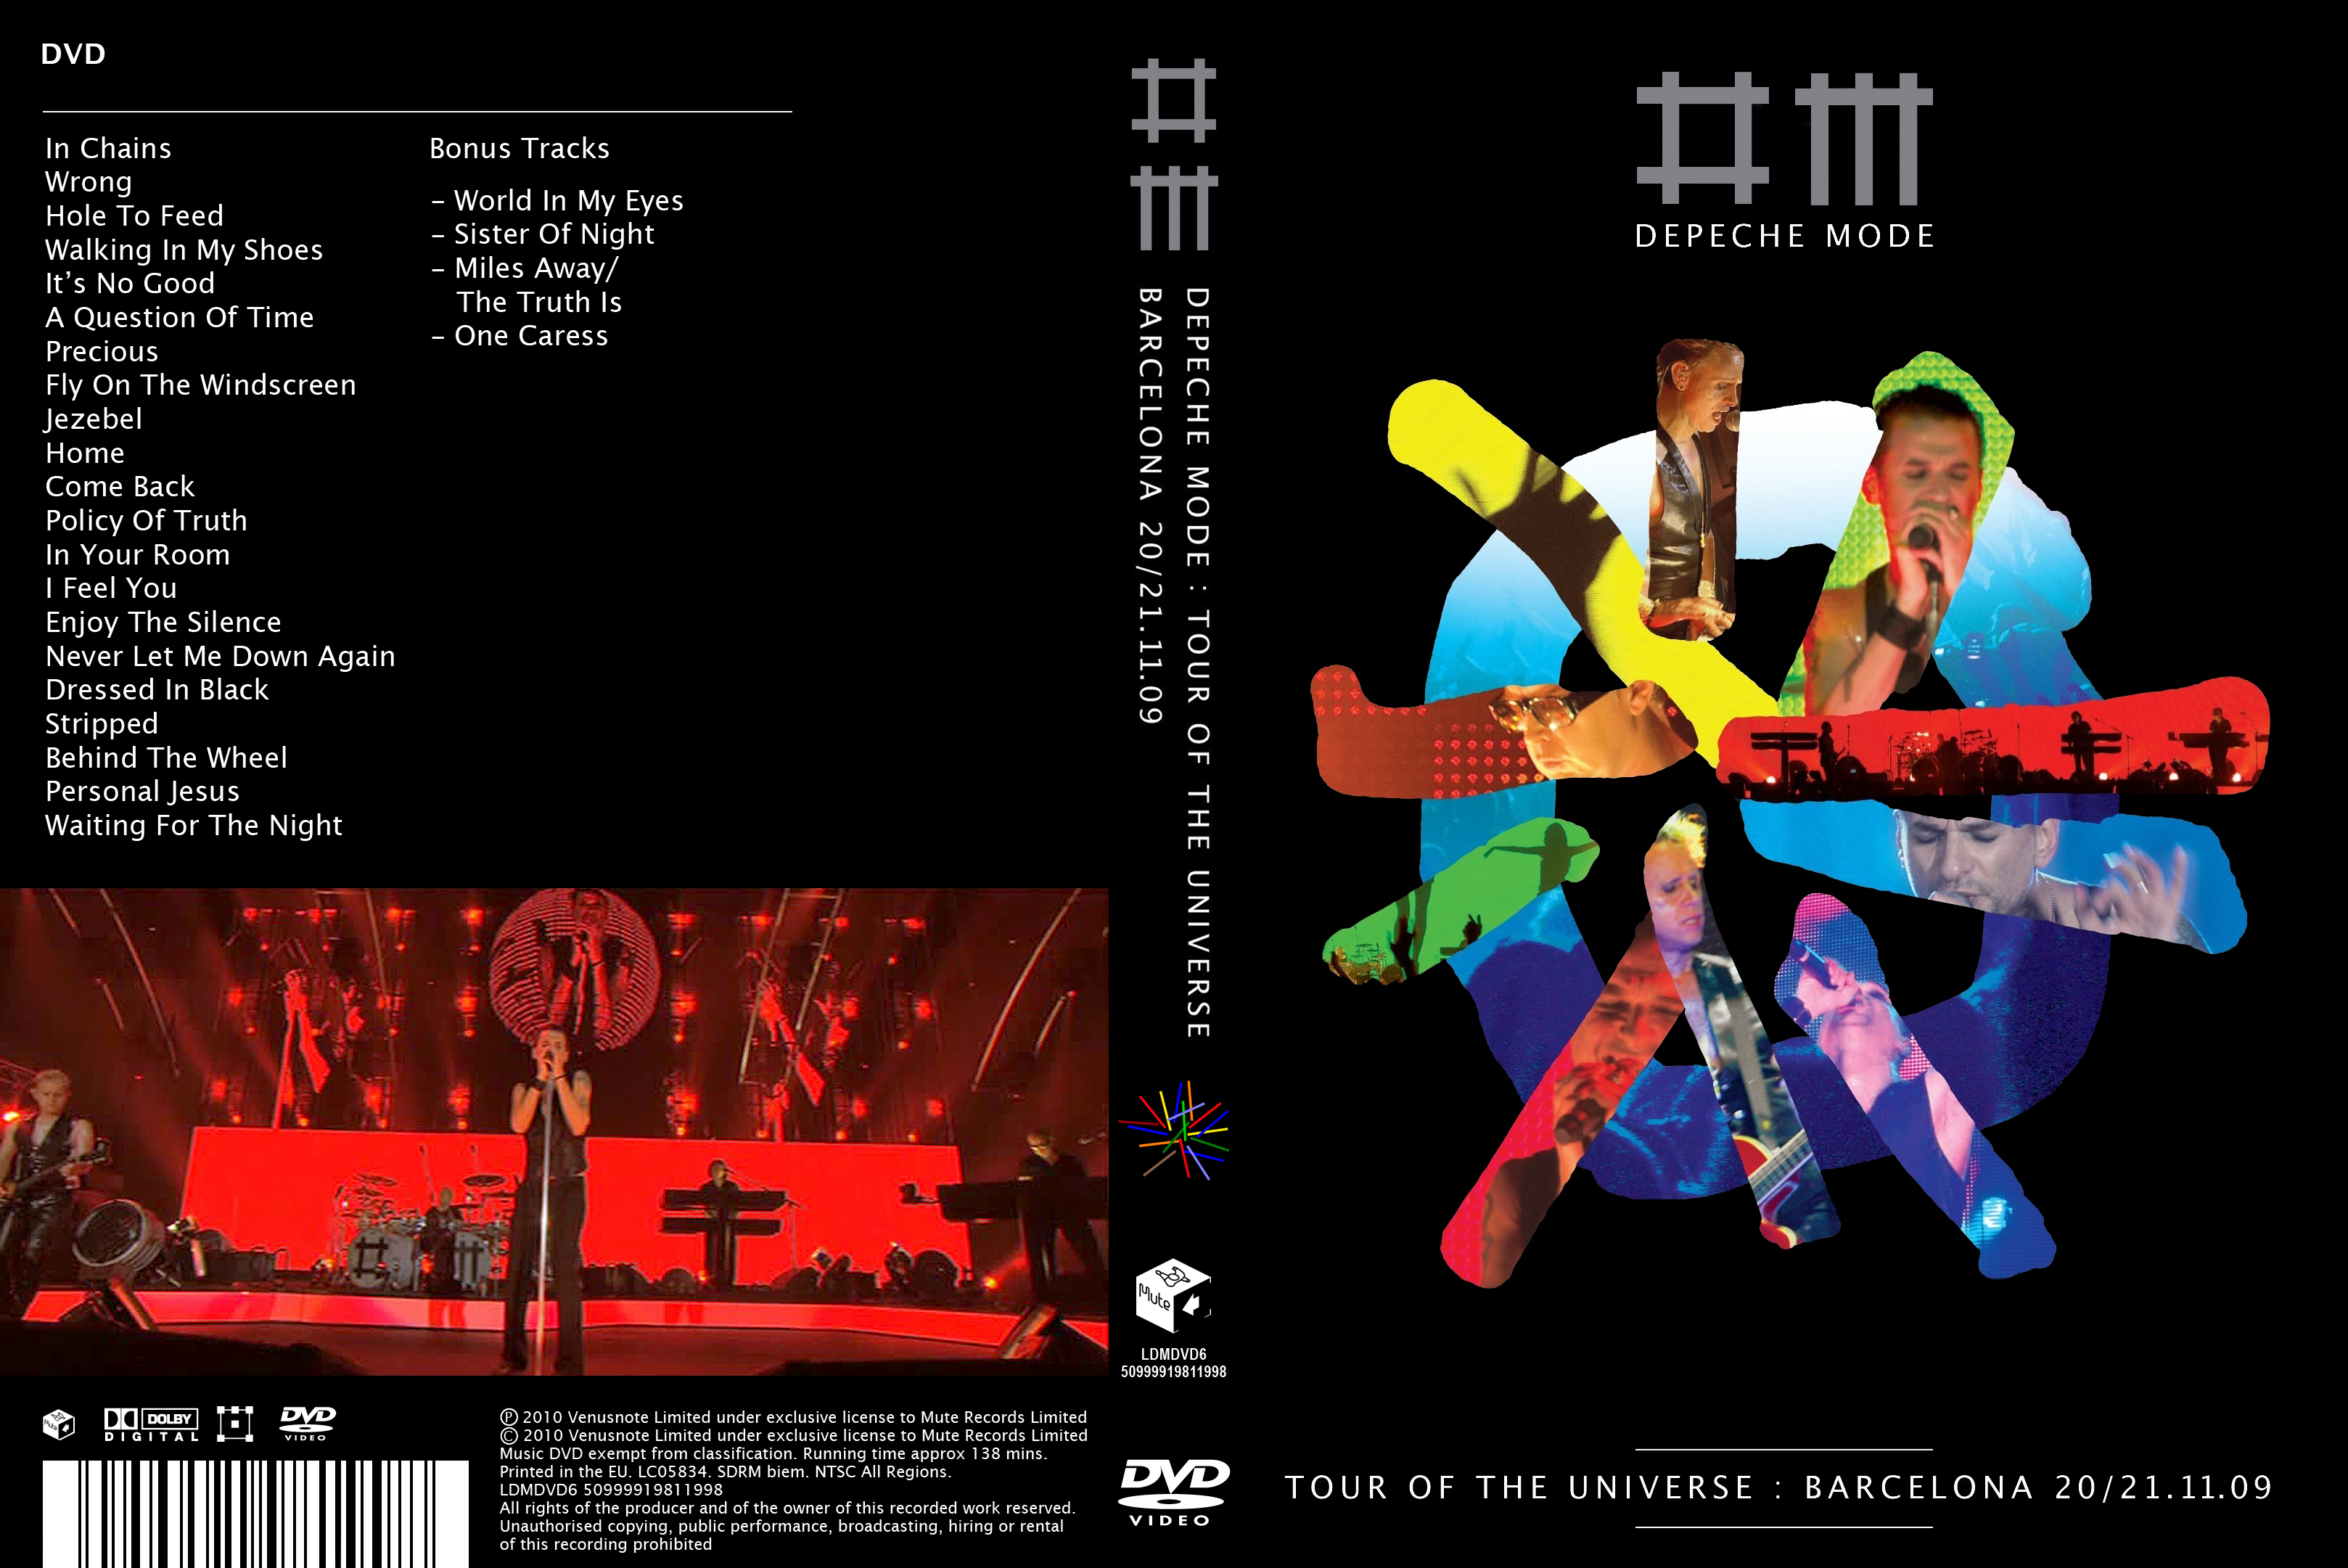 Jaquette DVD Depeche Mode - Barcelona 2009 custom